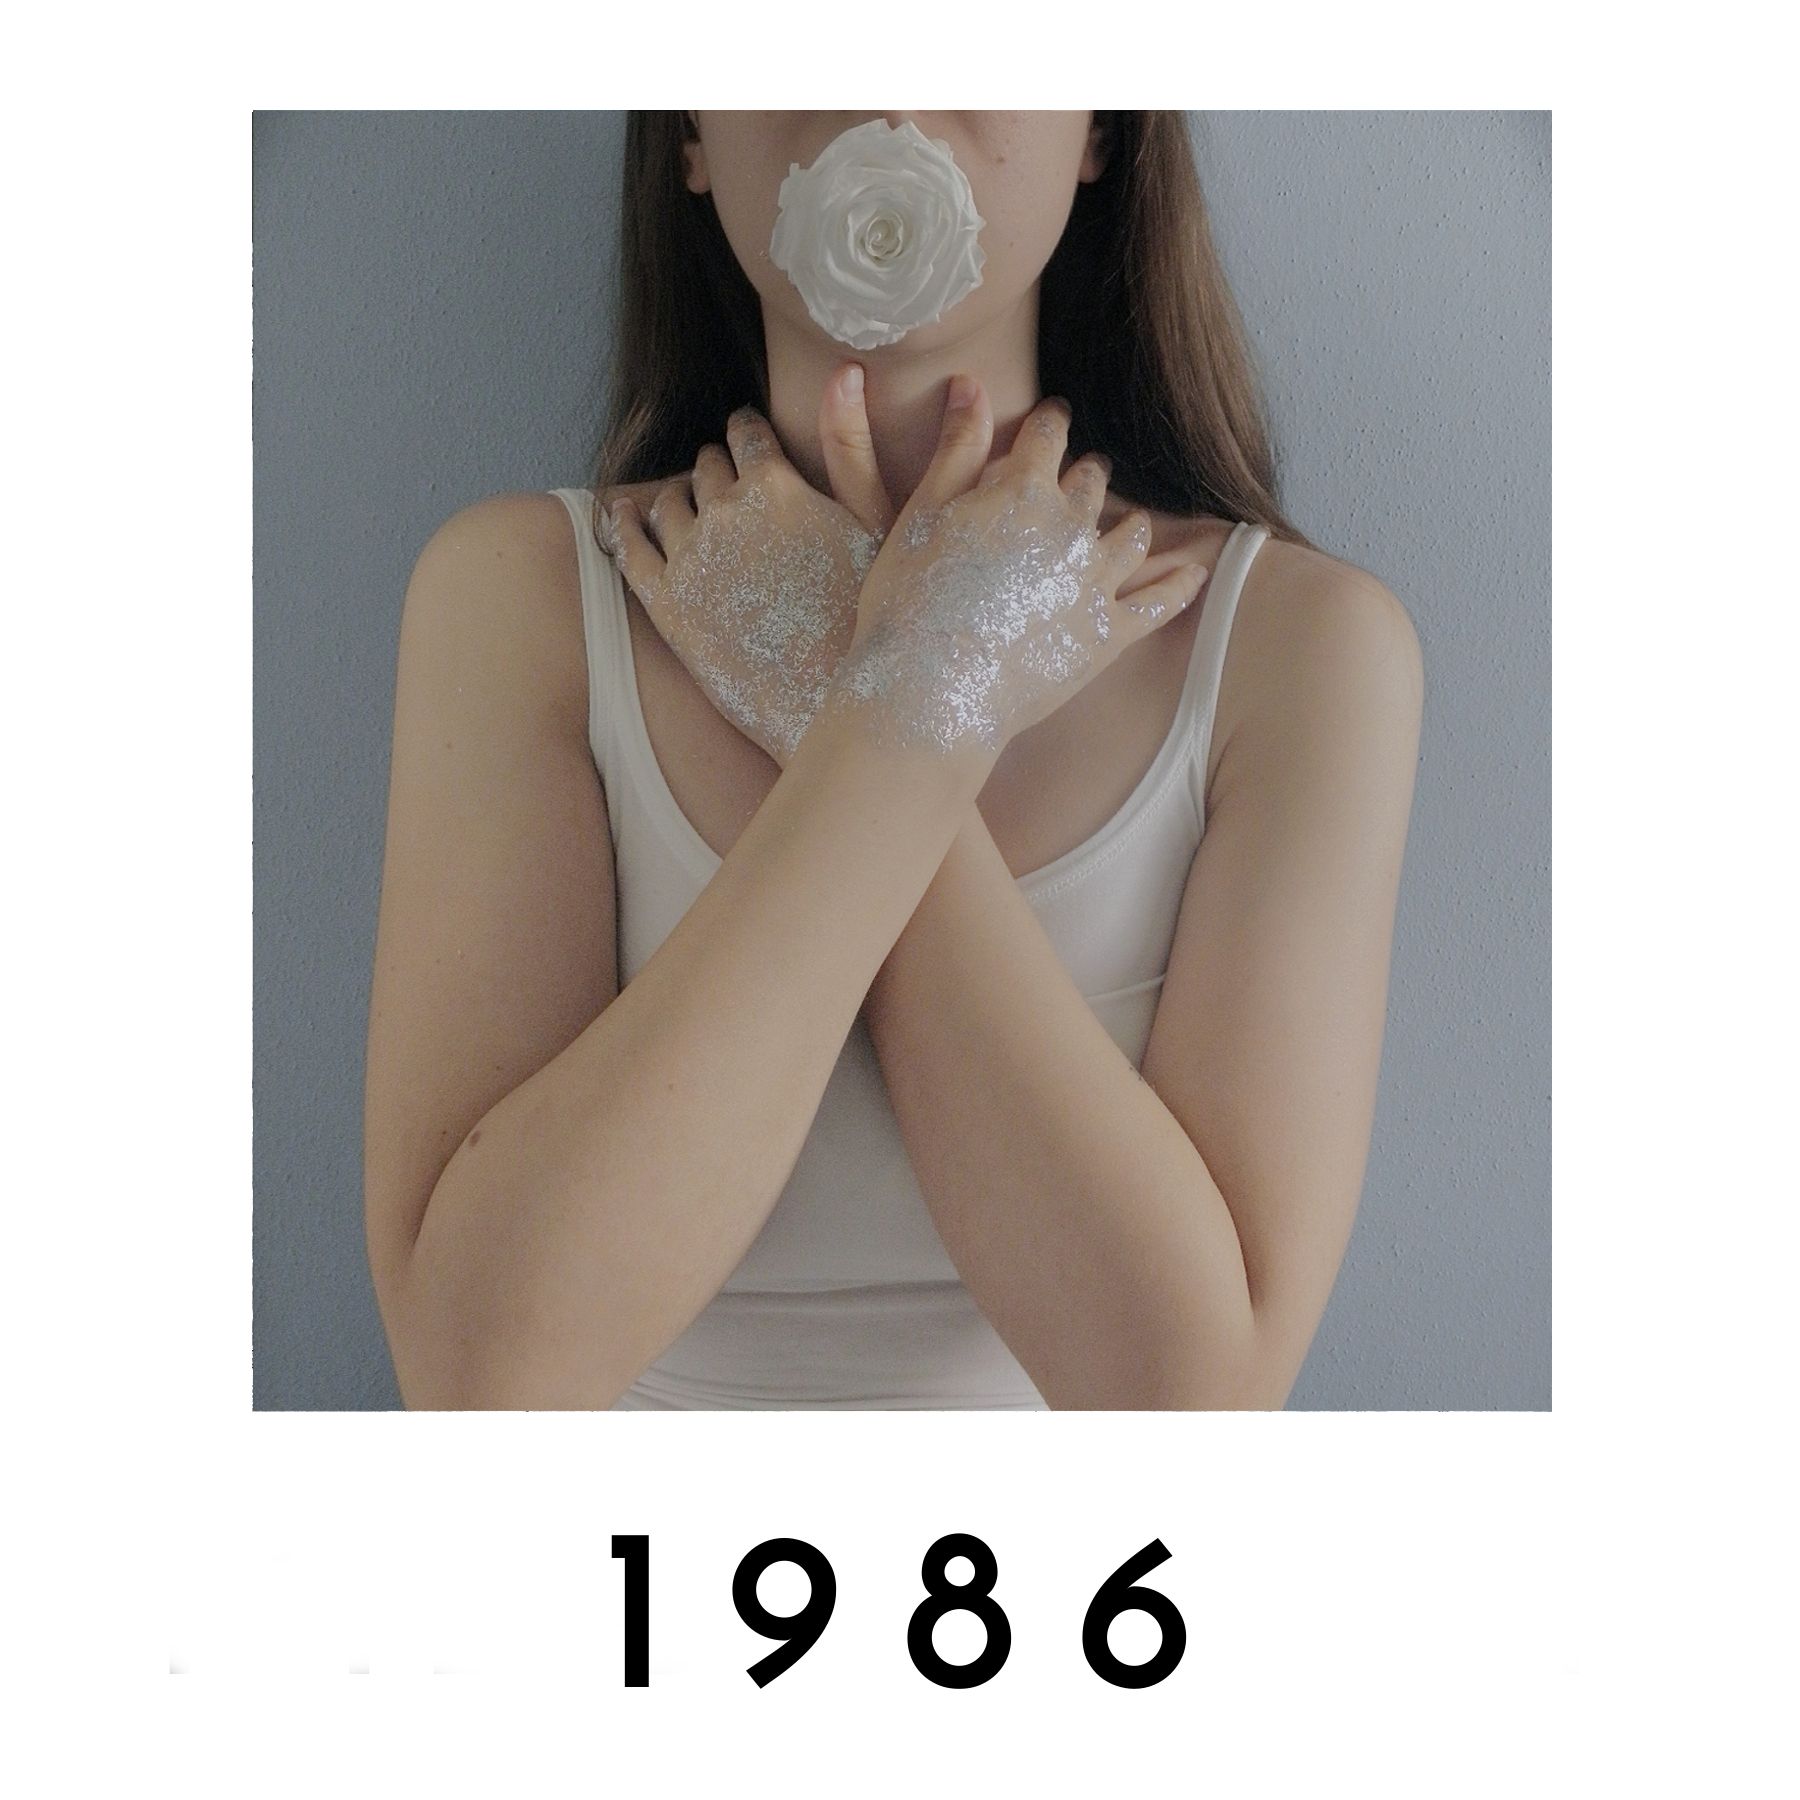 New: HÅN – 1986